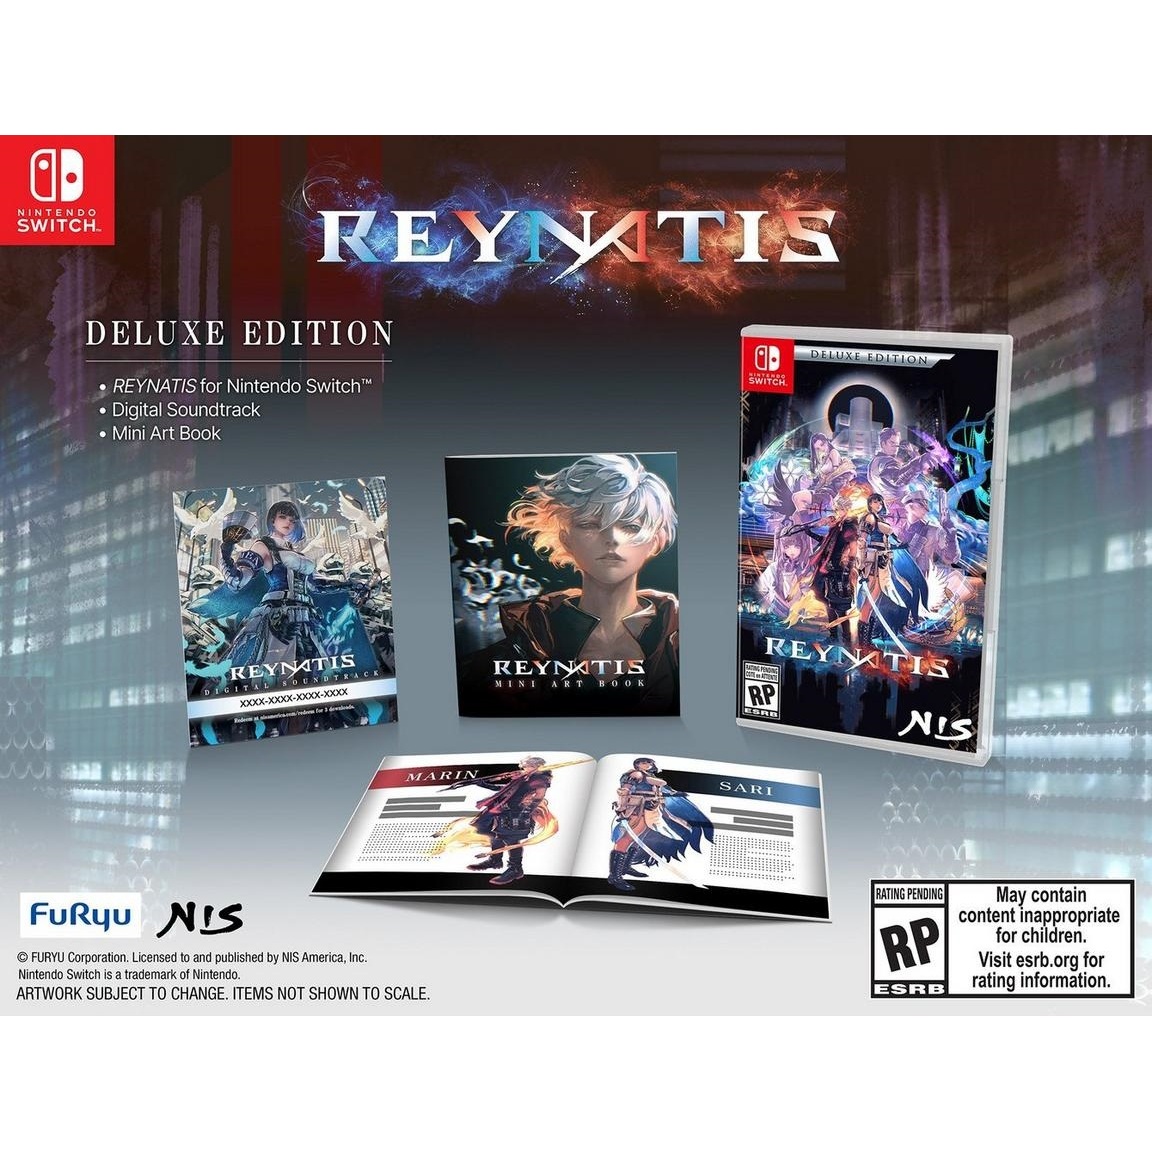 Reynatis Deluxe Edition (PlayStation 4) (8)